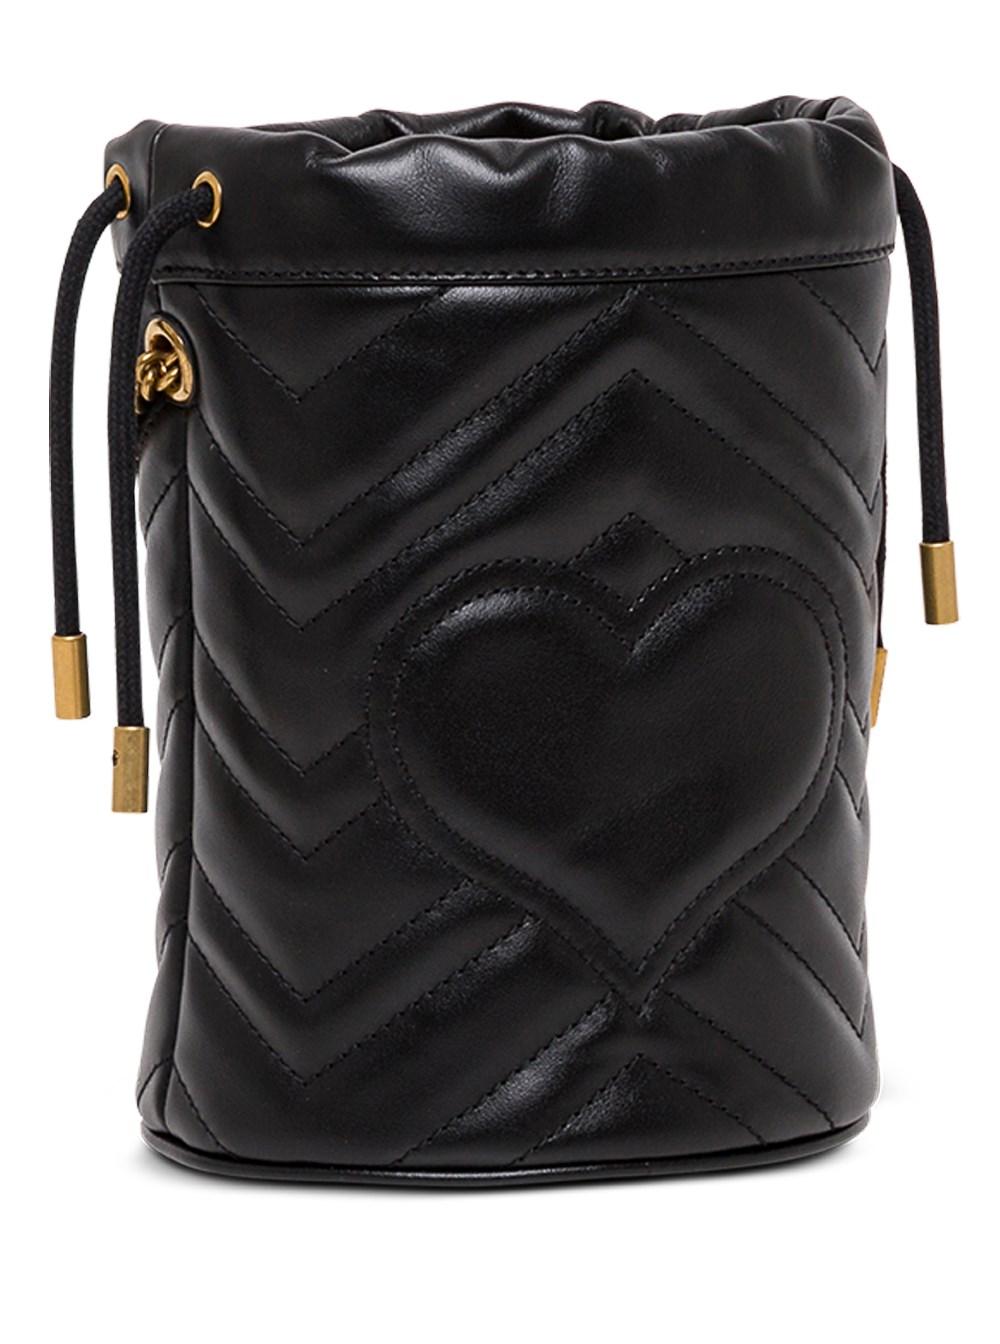 Gucci Crossbody Leather Bucket Bag With Logo in Black | Lyst